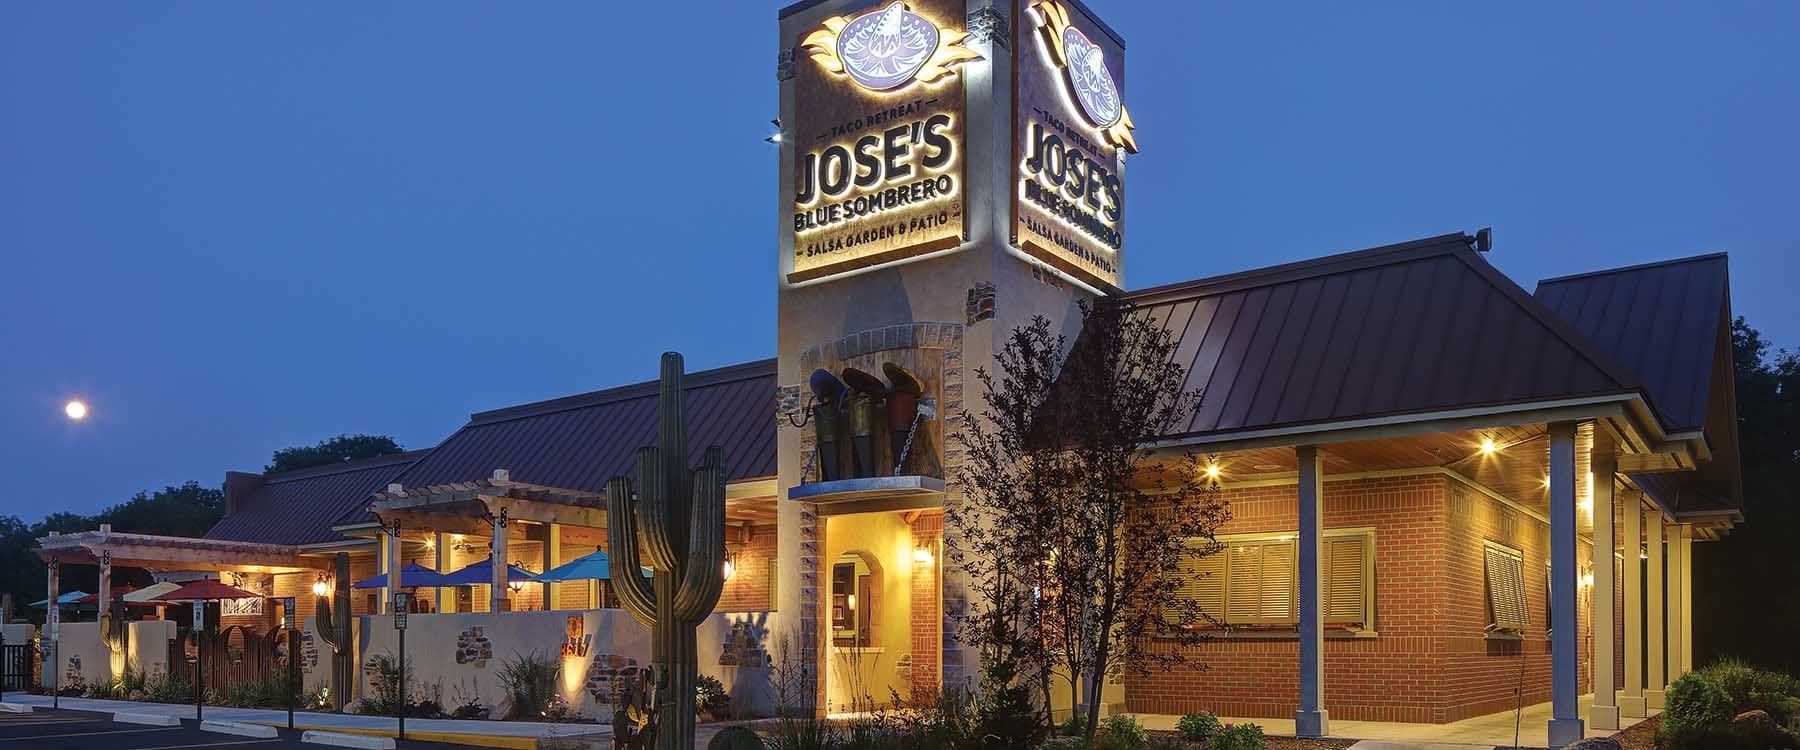 Joses Blue Sombrero in Brookfield, Wisconsin